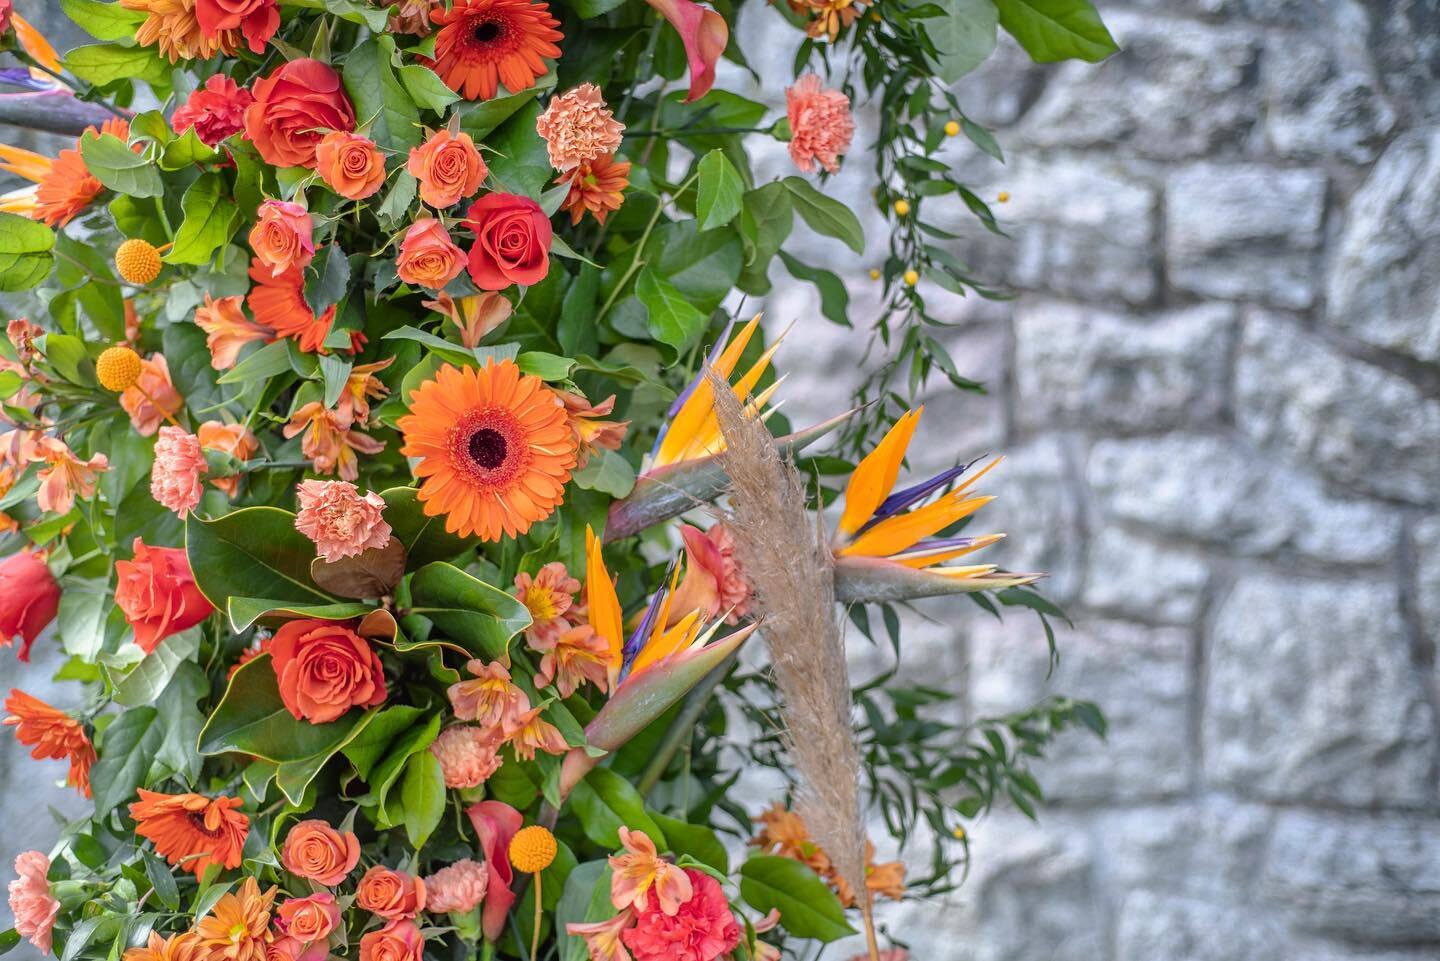 Fleurs de Villes, Niagara Falls, ON

Orange Floral Hoop in Remembrance of the Residential School Children, created by @petalsfloral 

. . . . .
#fleursdevilles #fleursdevillesniagarafalls #niagarafalls #niagara #petalsdesign #wallacephotography